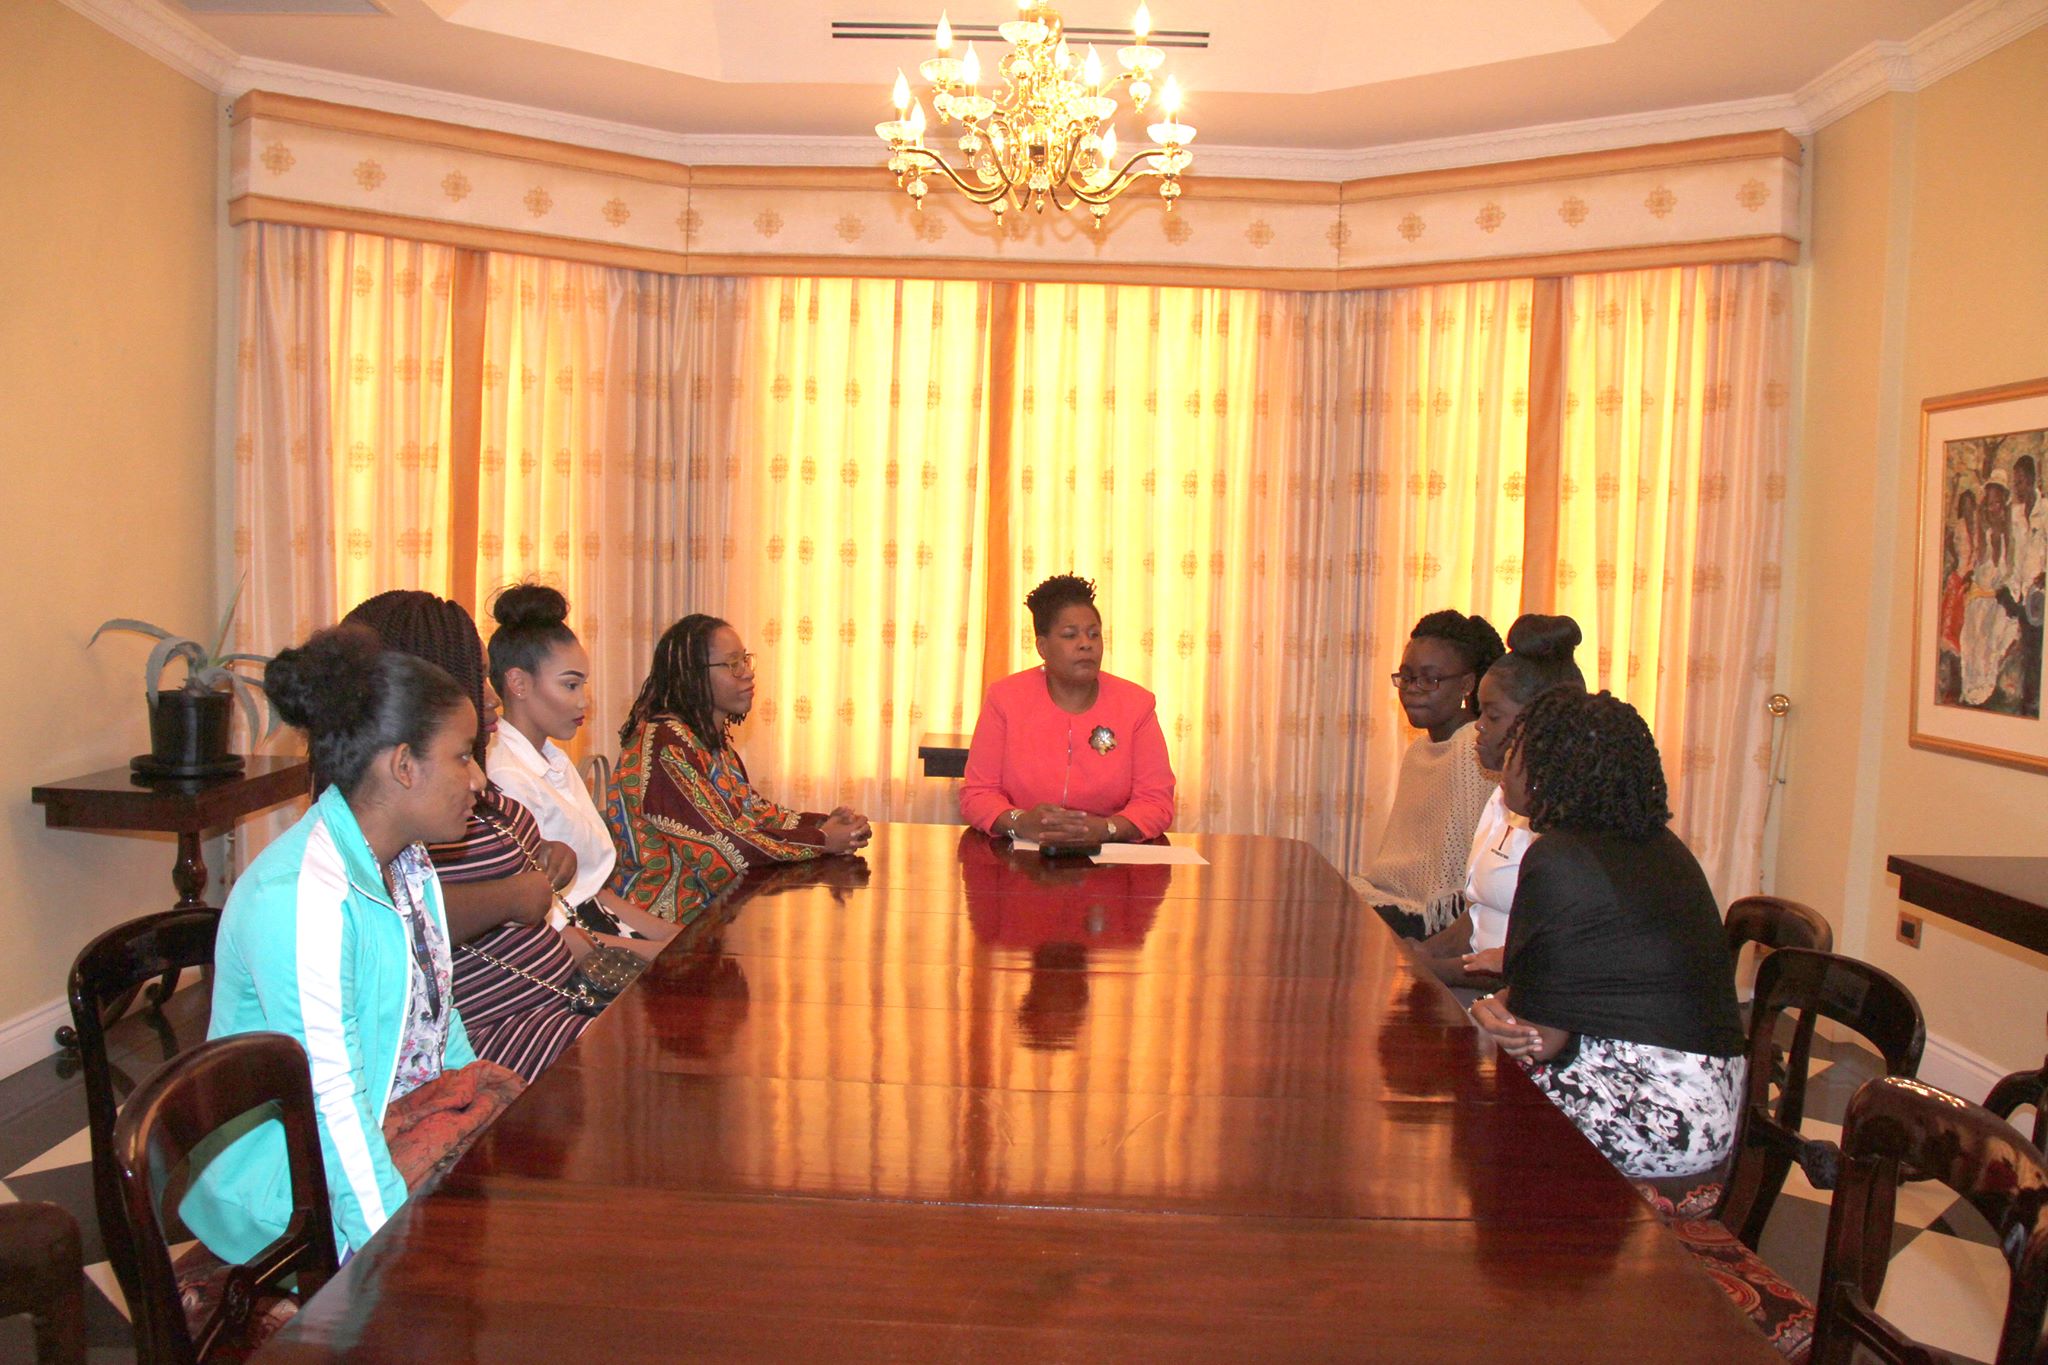 Her Excellency Receives Participants of the NiNa Young Women’s Entrepreneurship Programme